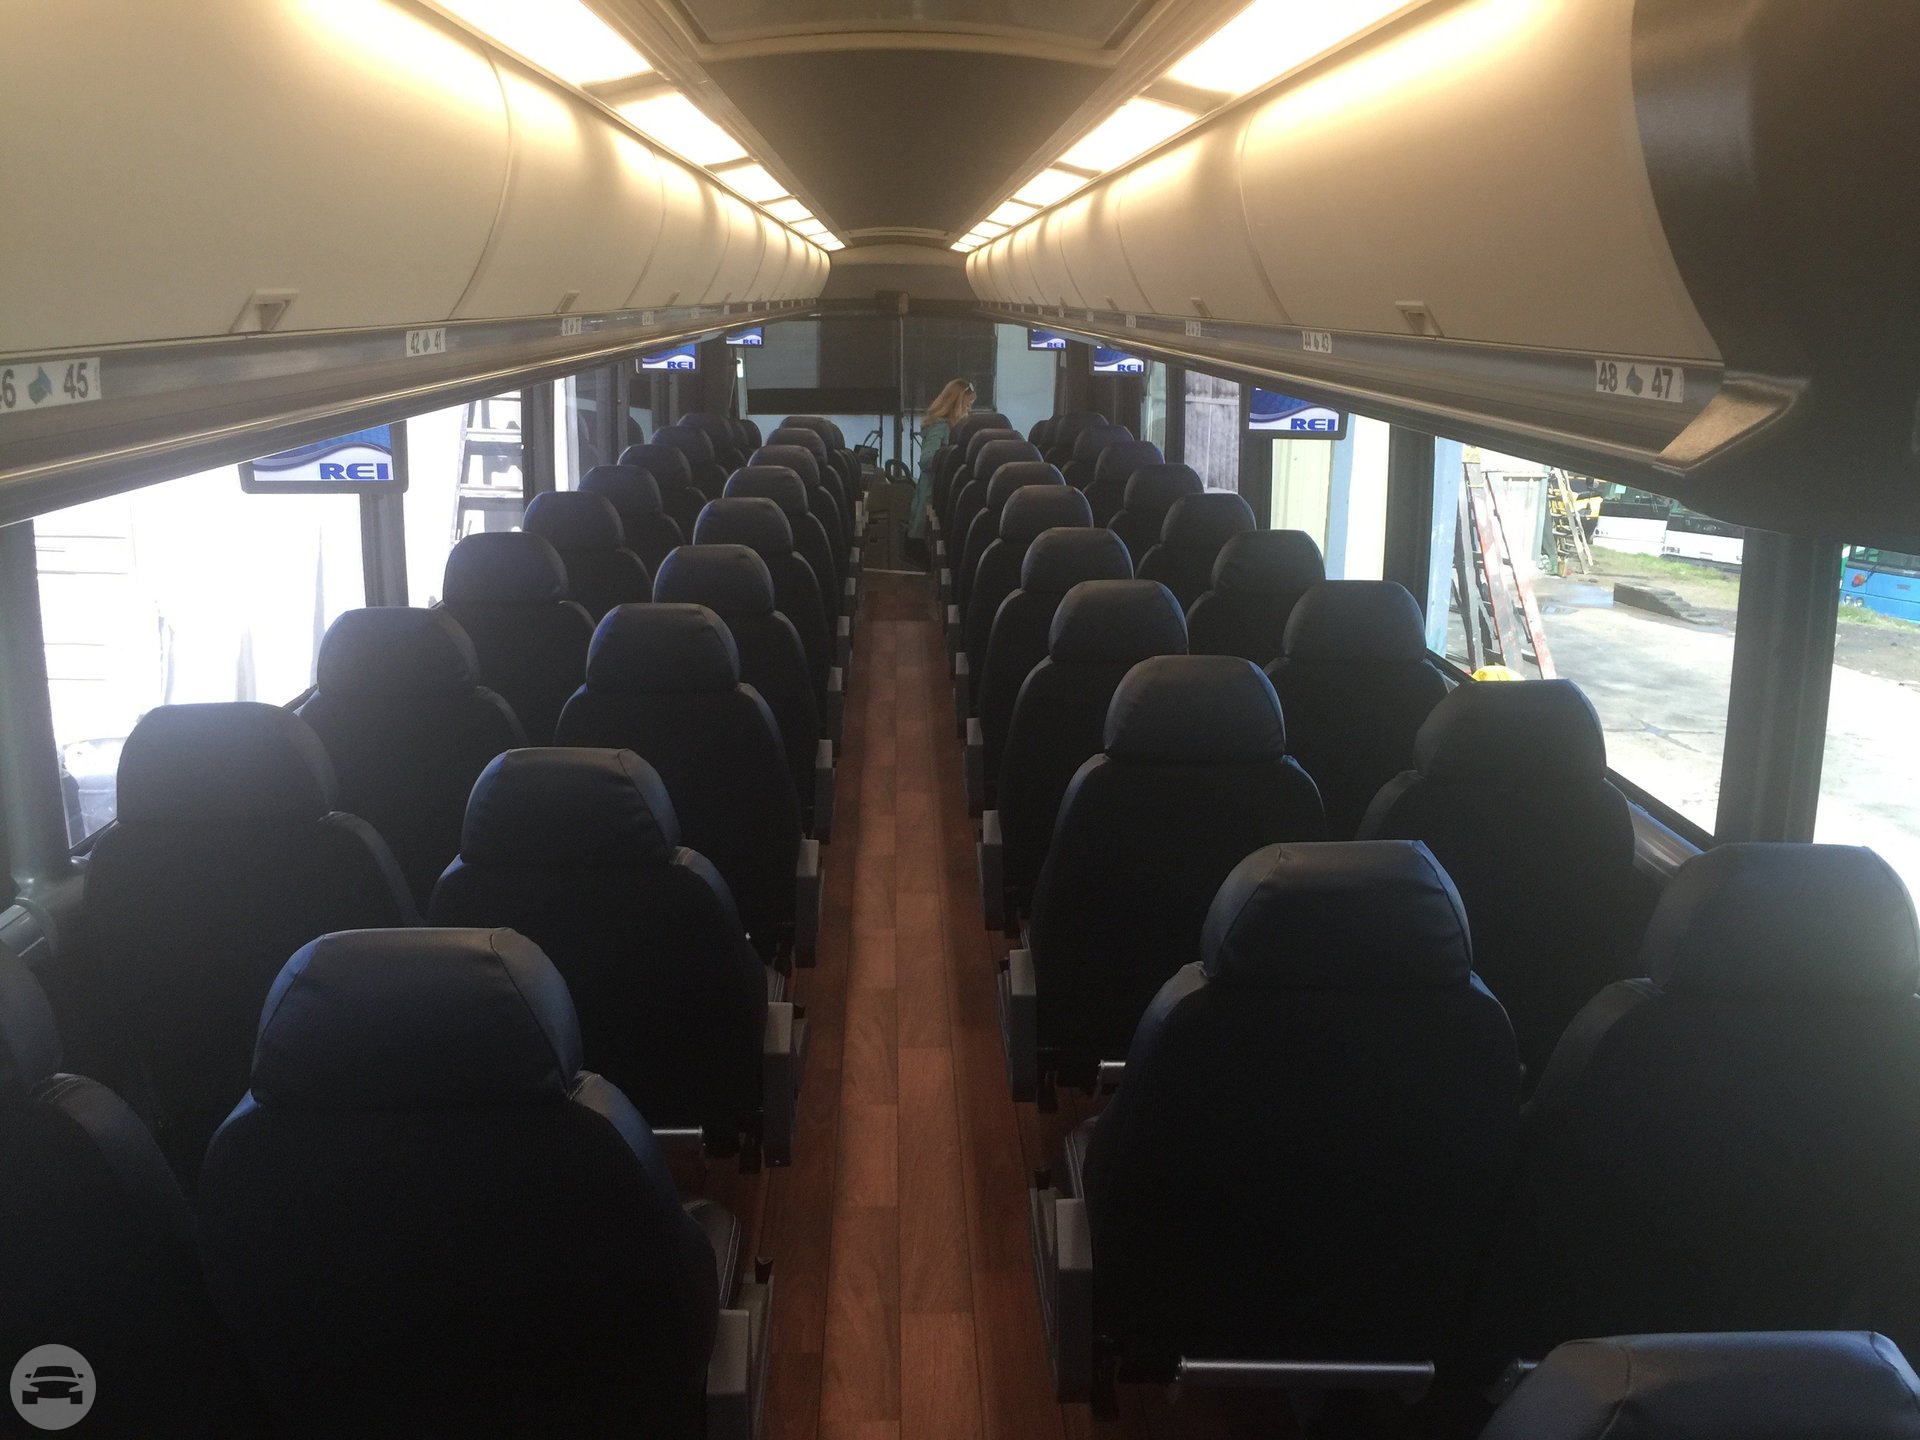 54 Passenger Motor Coach
Coach Bus /
Rogers, AR

 / Hourly $0.00
